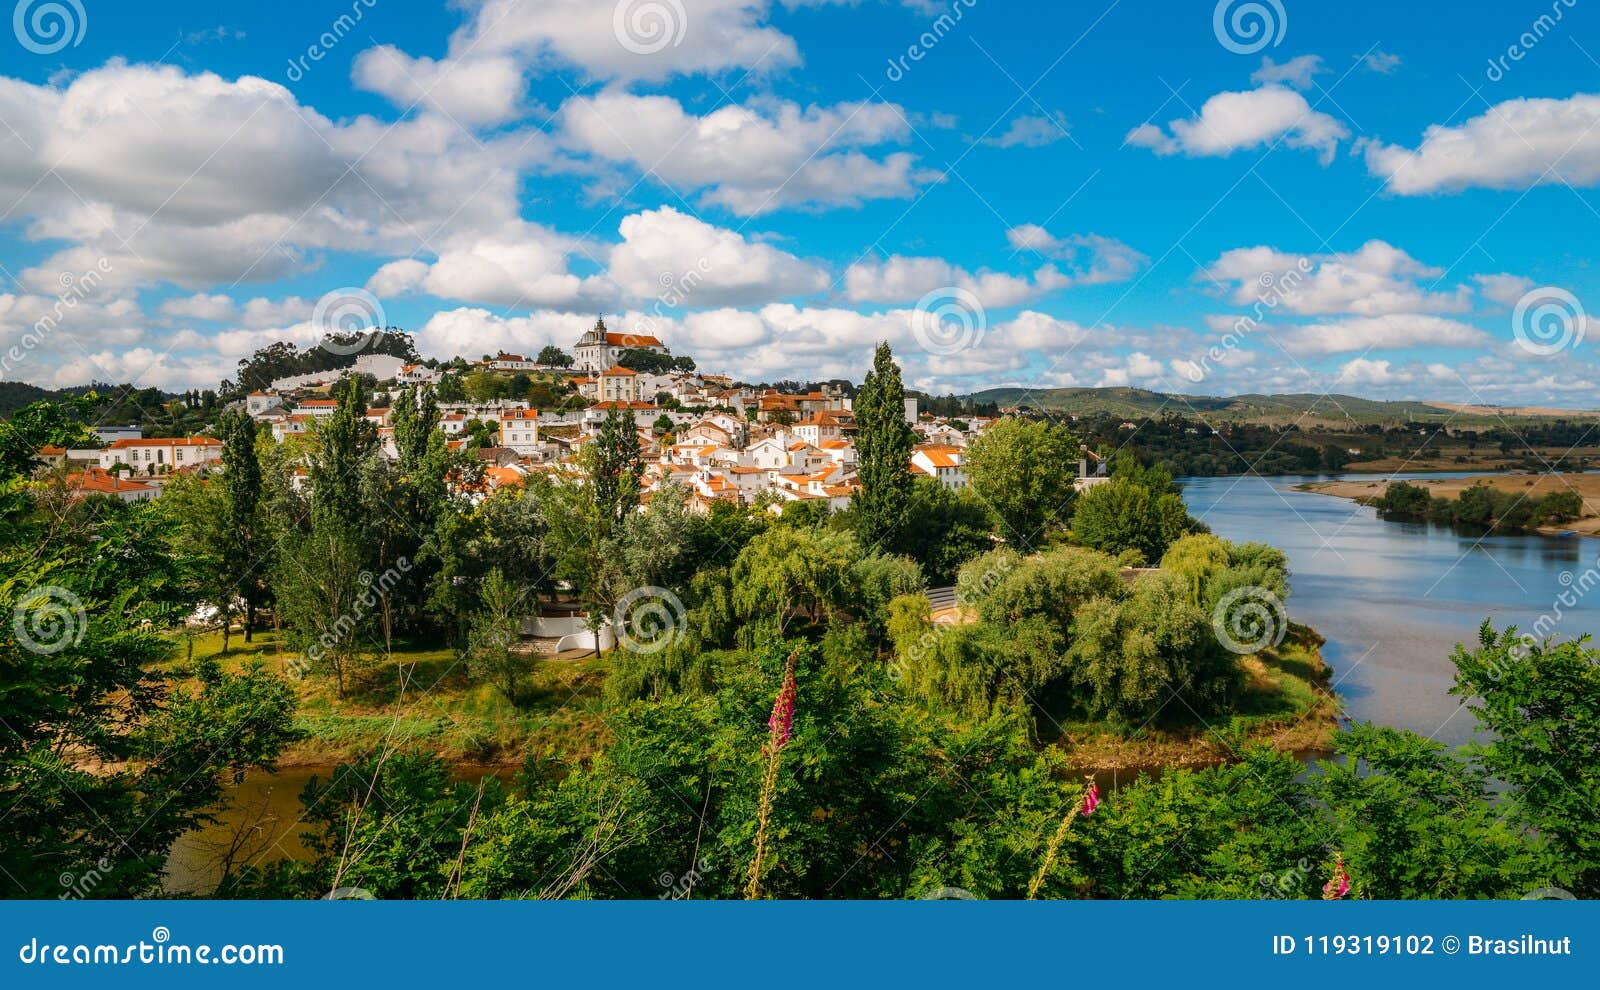 landscape of constancia. santarem, ribatejo, portugal